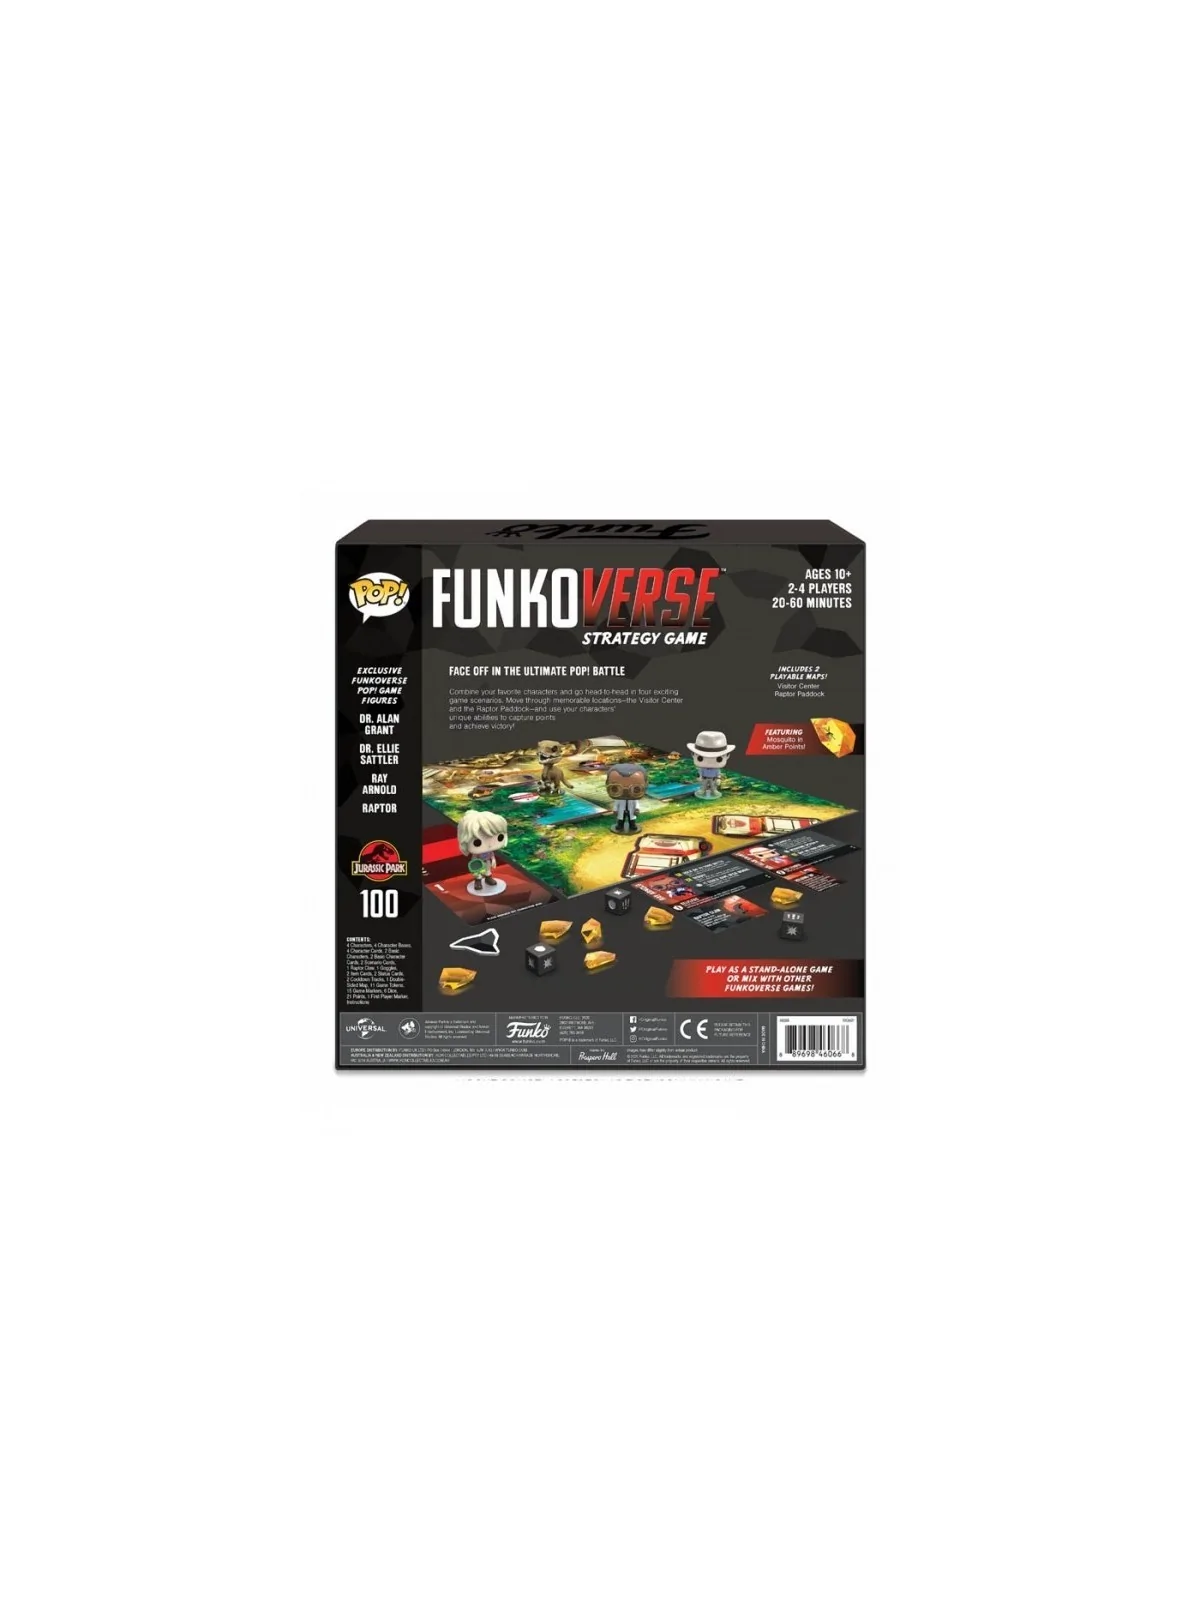 Comprar POP! Funkoverse Strategy Game: Jurassic Park barato al mejor p